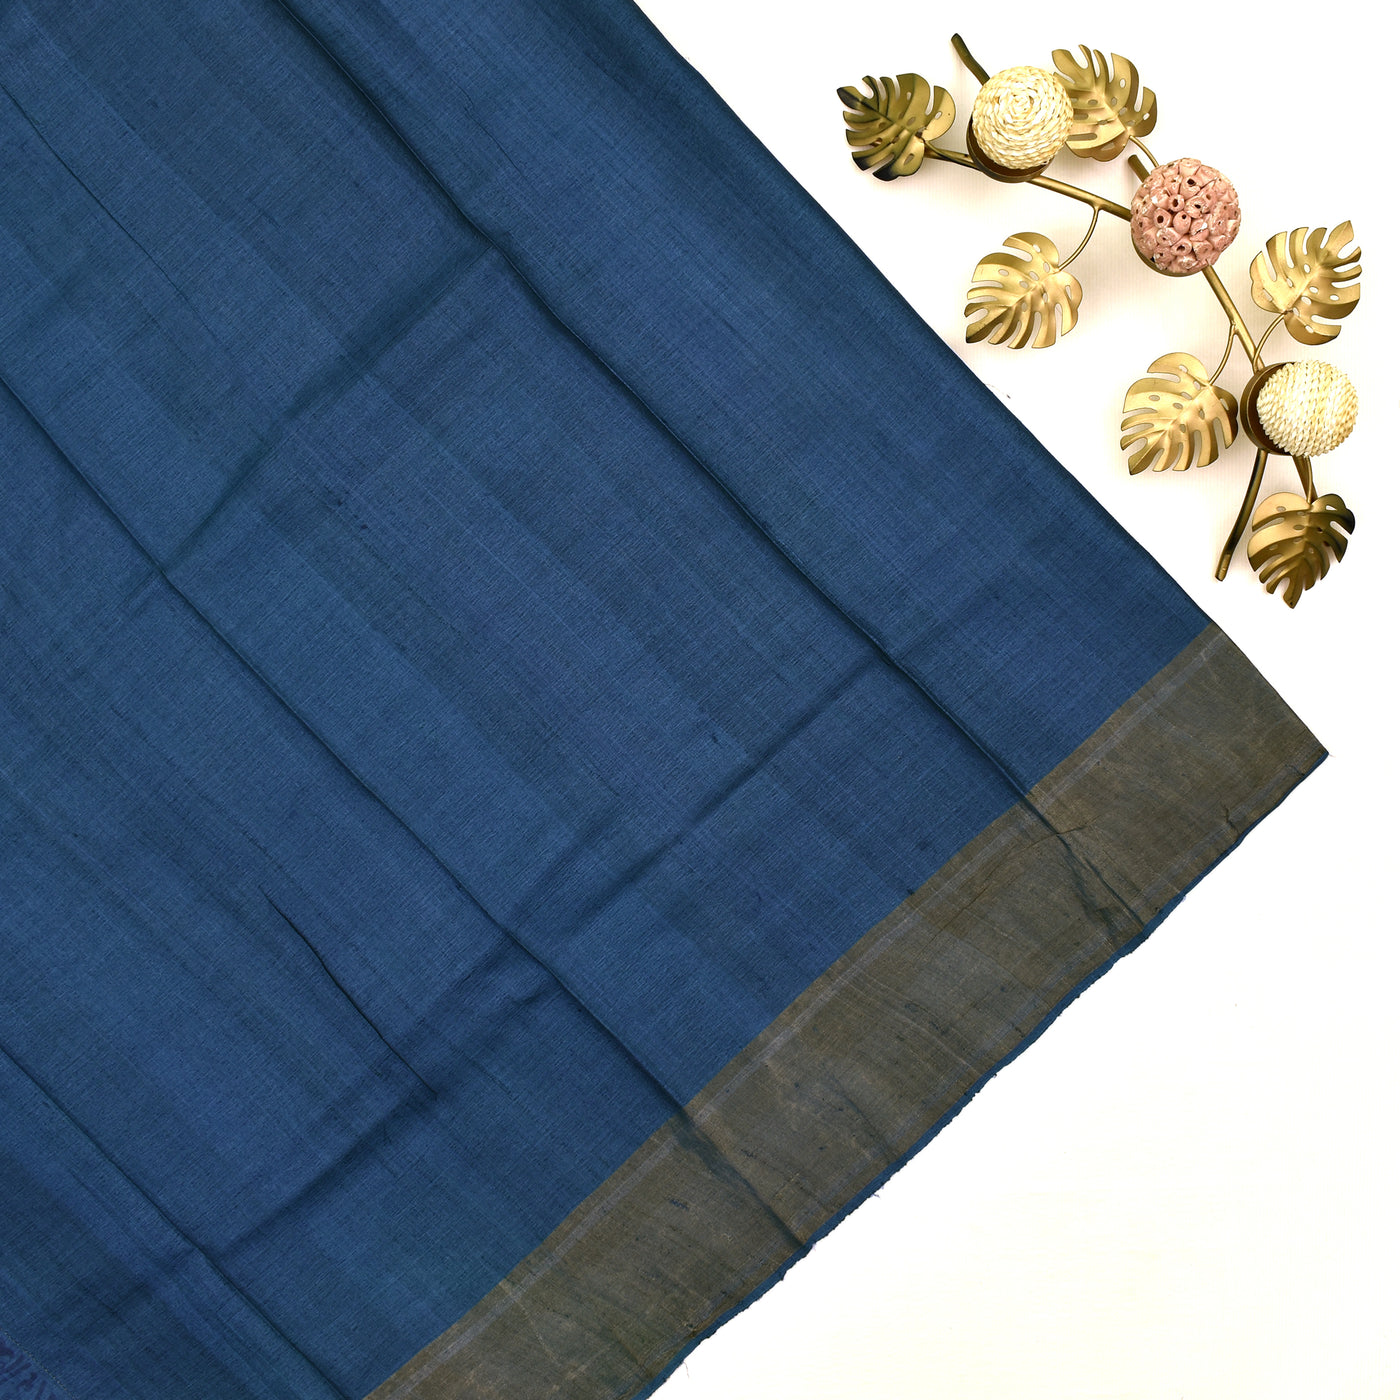 MS Blue Tussar Silk Saree with plain blouse